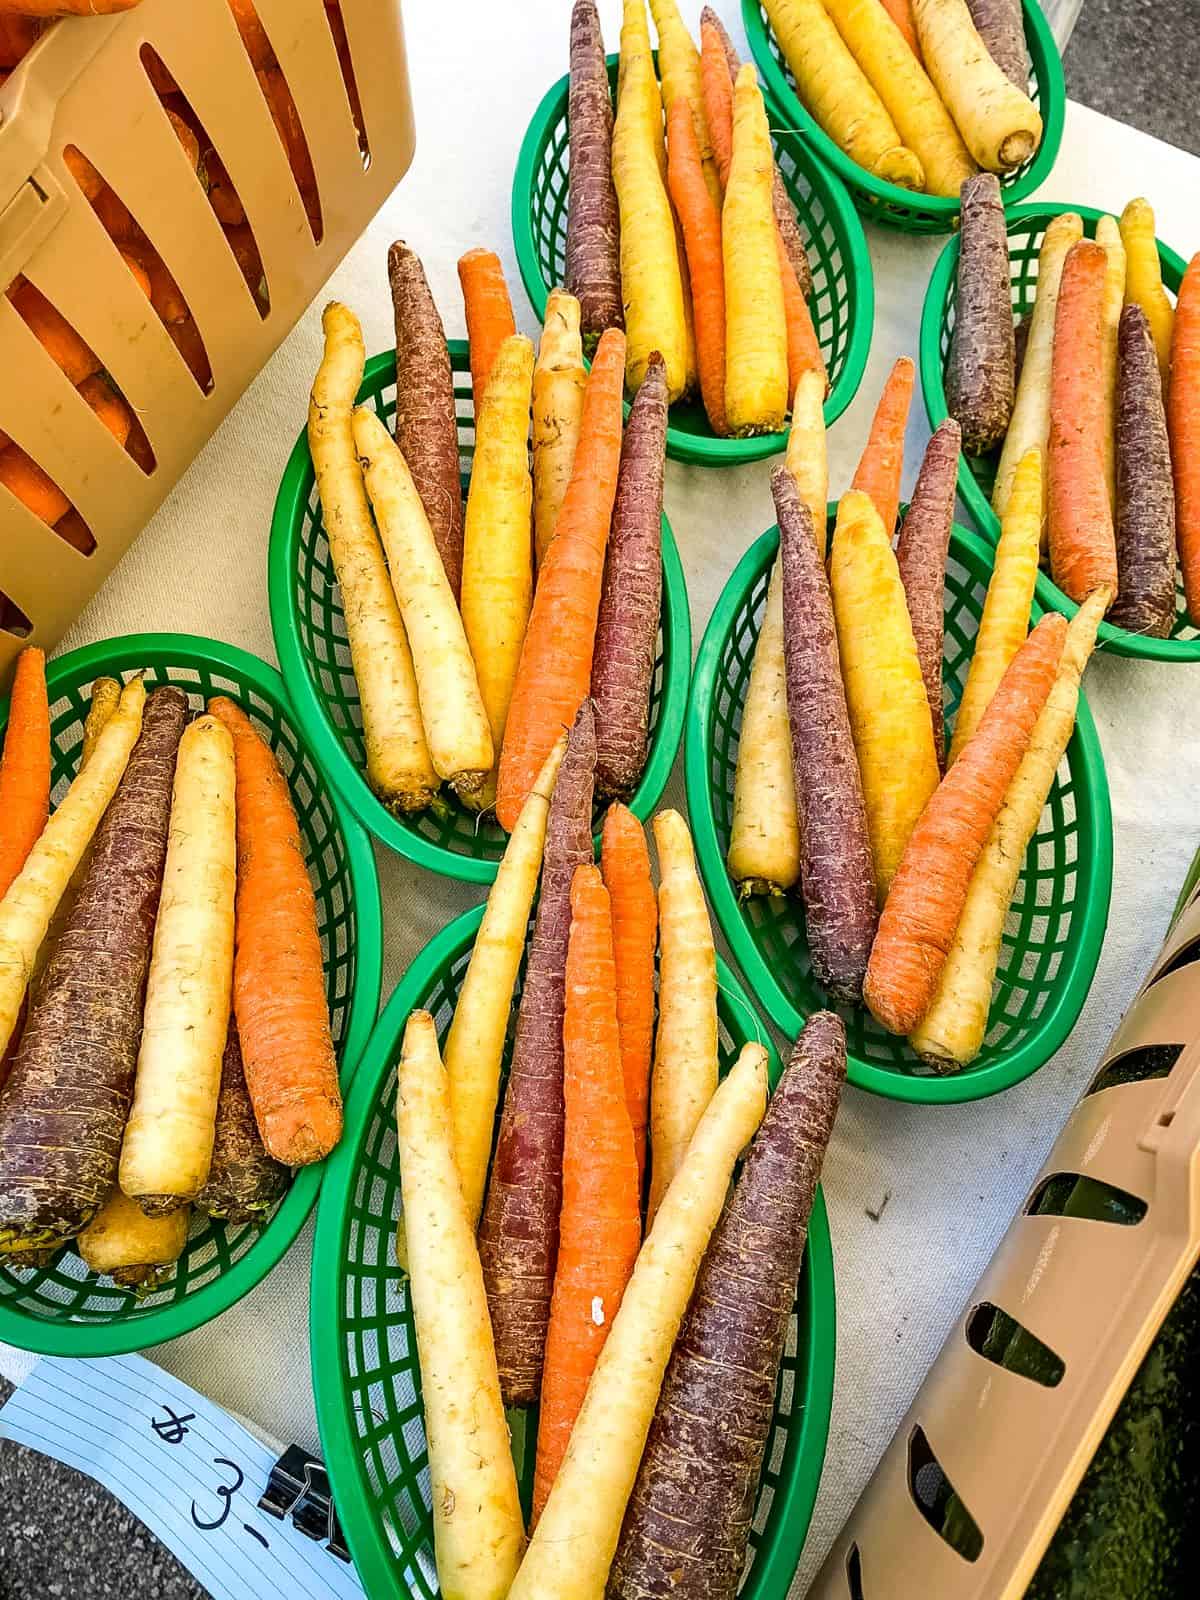 Tri-colored carrots at farmers market.